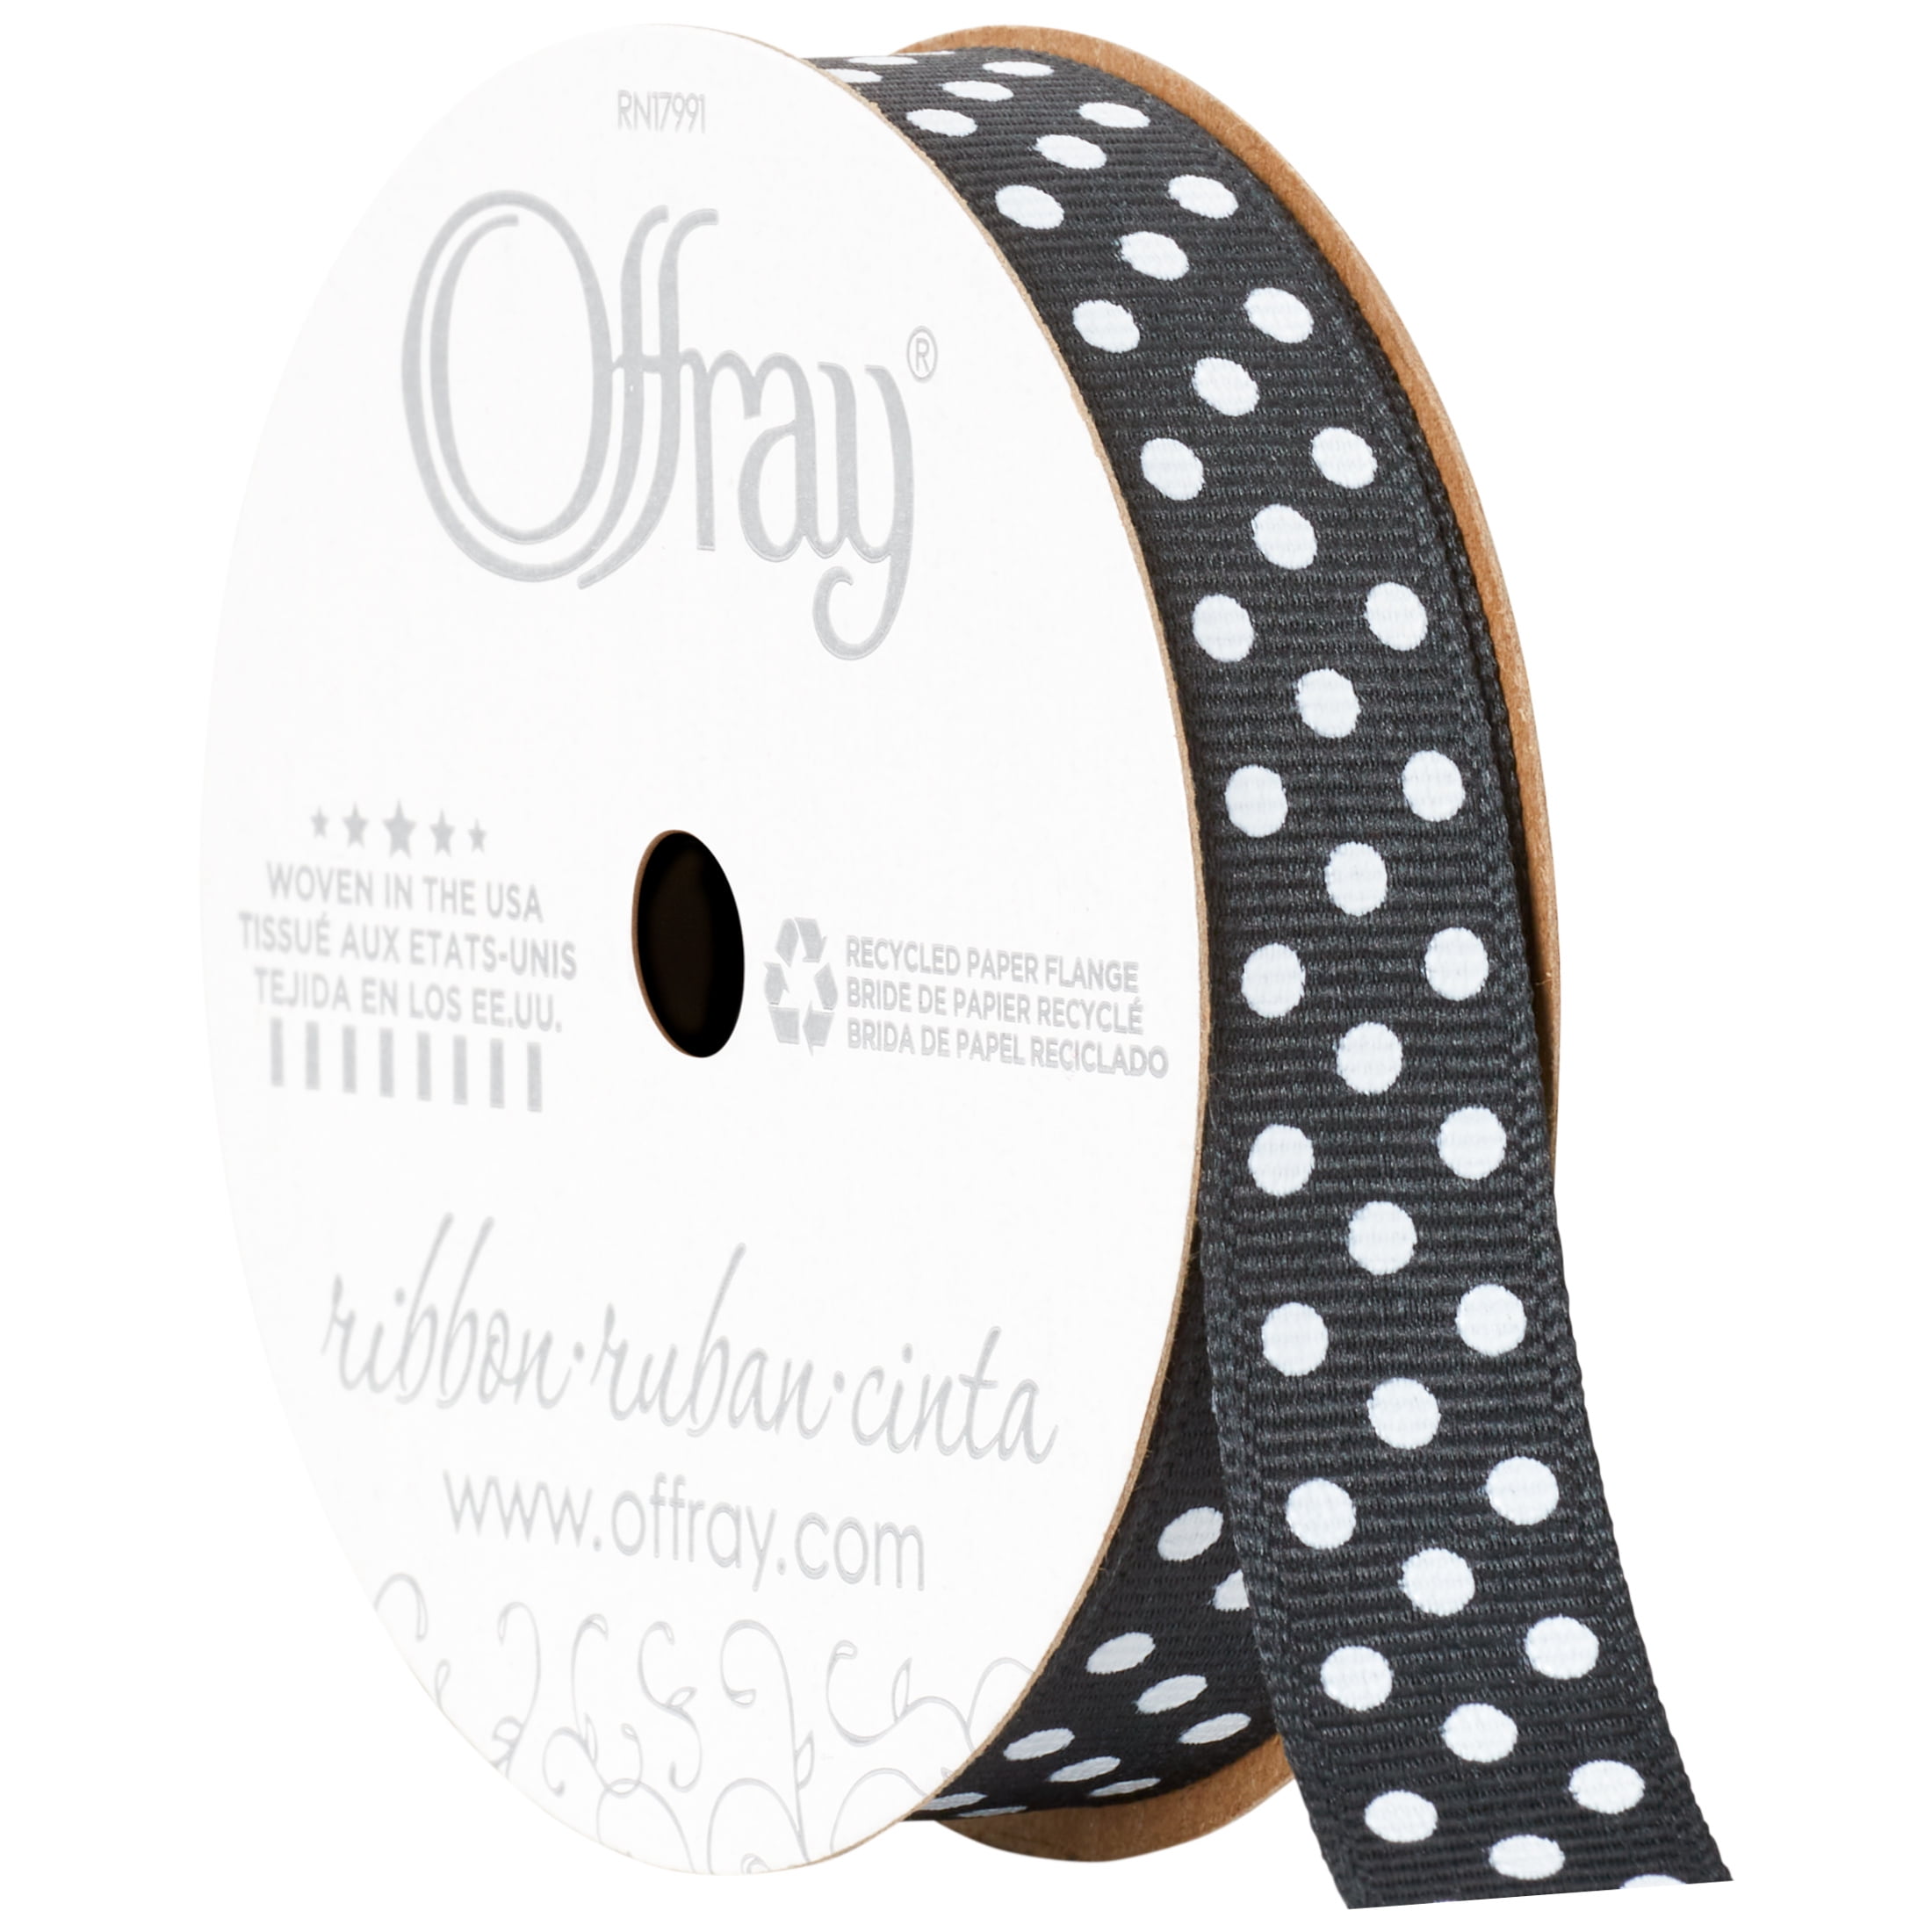 Offray Ribbon, Black 5/8 inch White Dots Grosgrain Ribbon, 9 feet